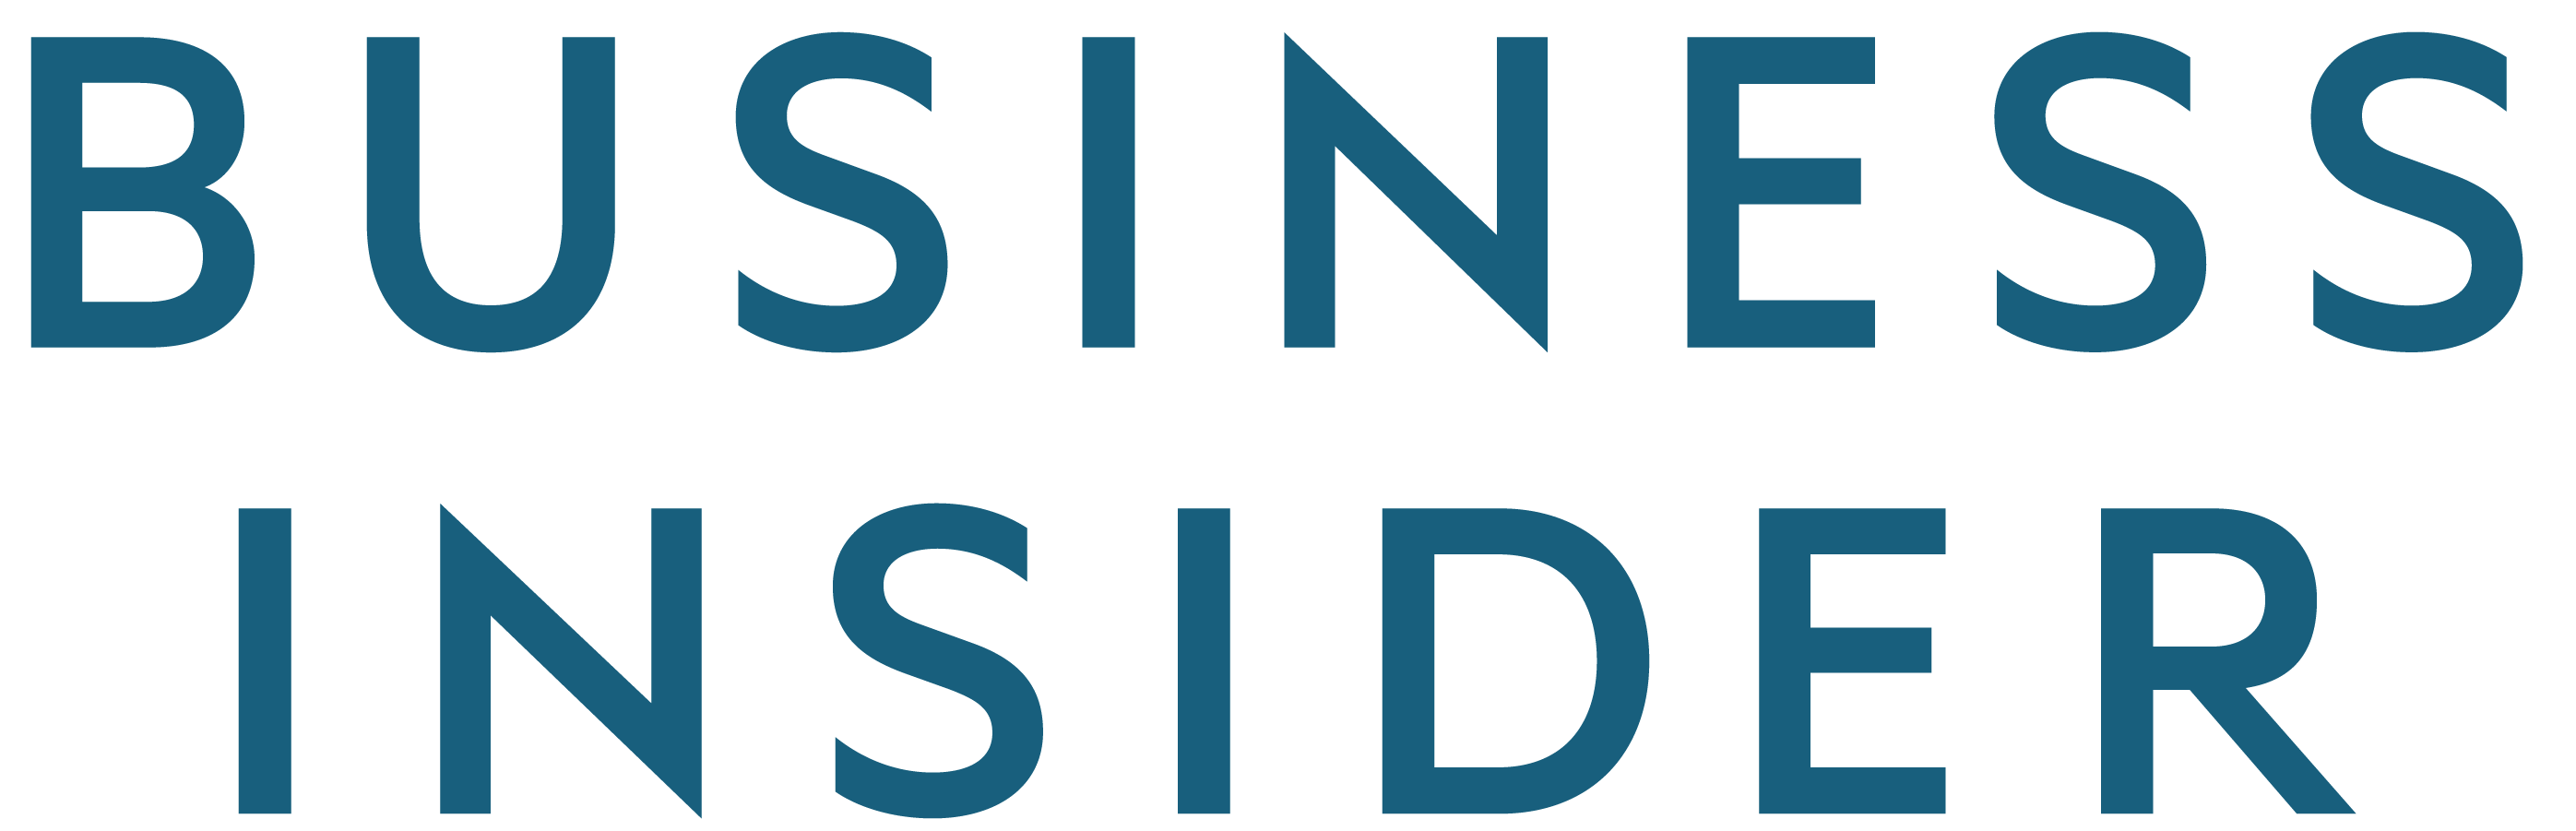 Businessinsider logo